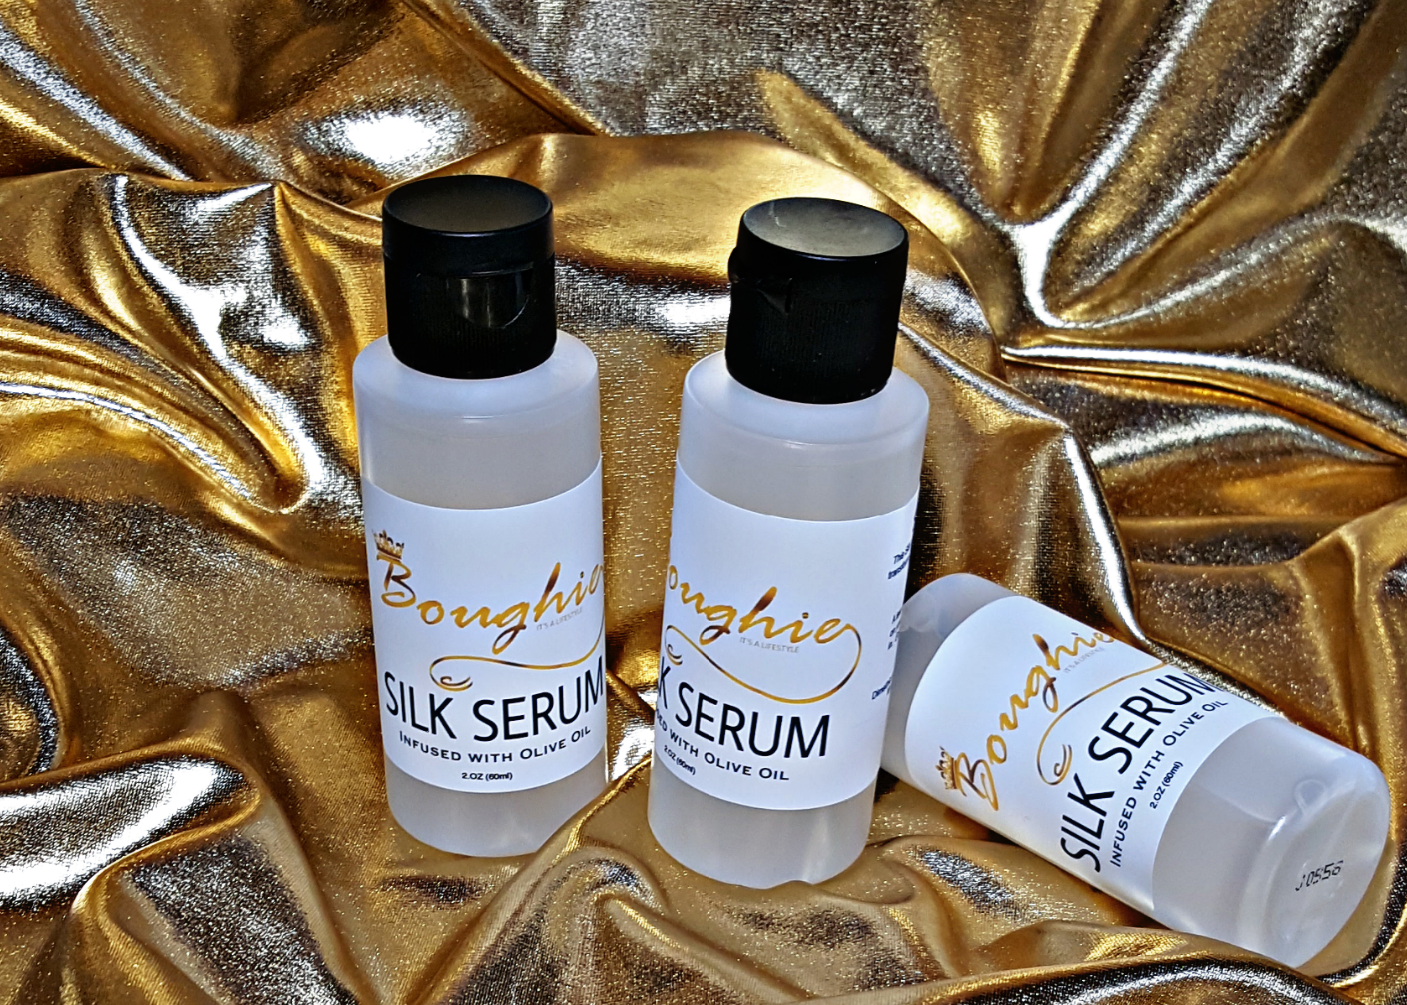 Silk Serum - Boughie virgin brazilian hair cosmetics apperal 